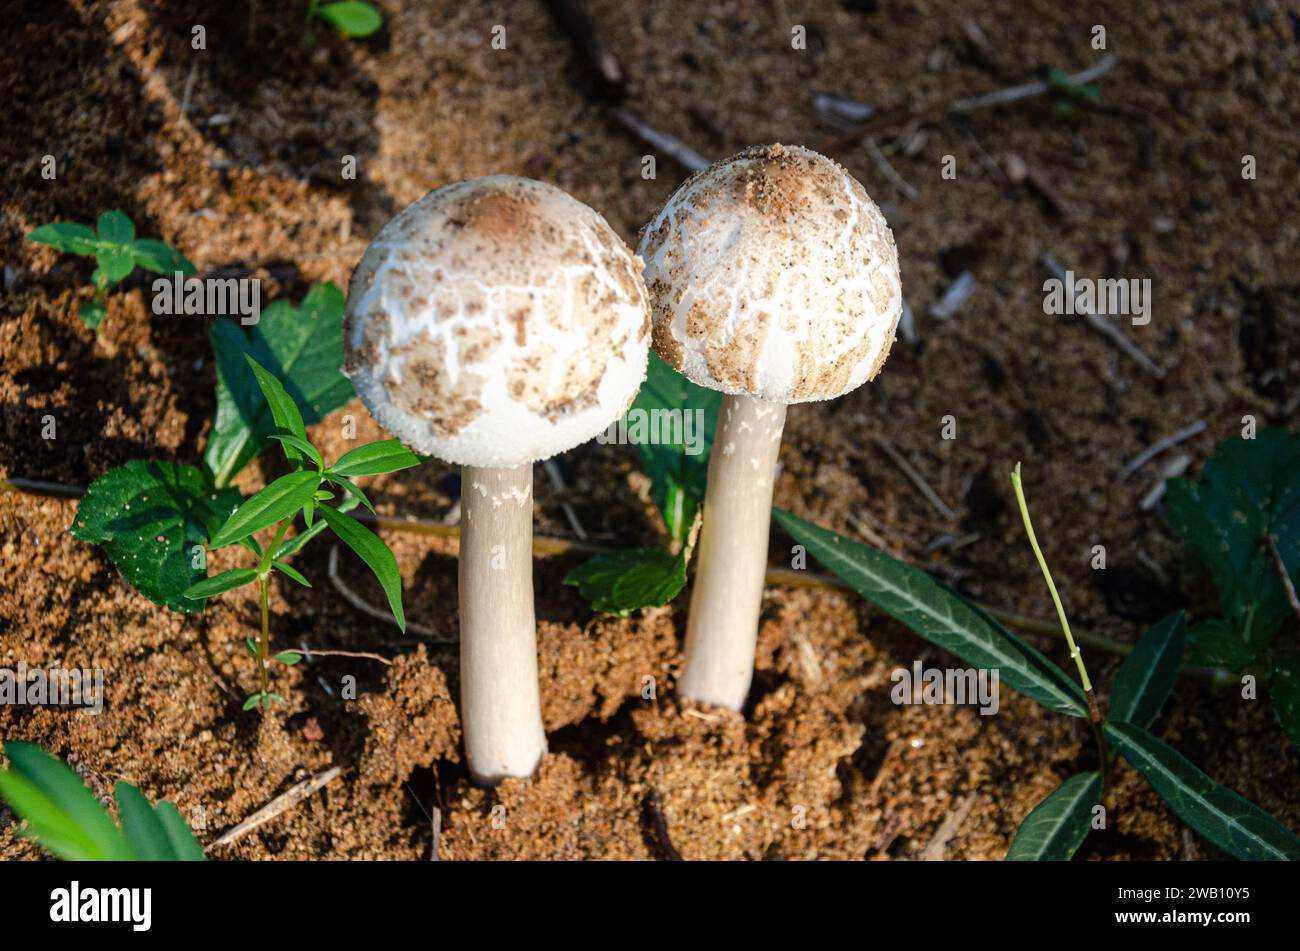 Chlorophyllum molybdites (Belly of the world) mushrooms Stock Photo